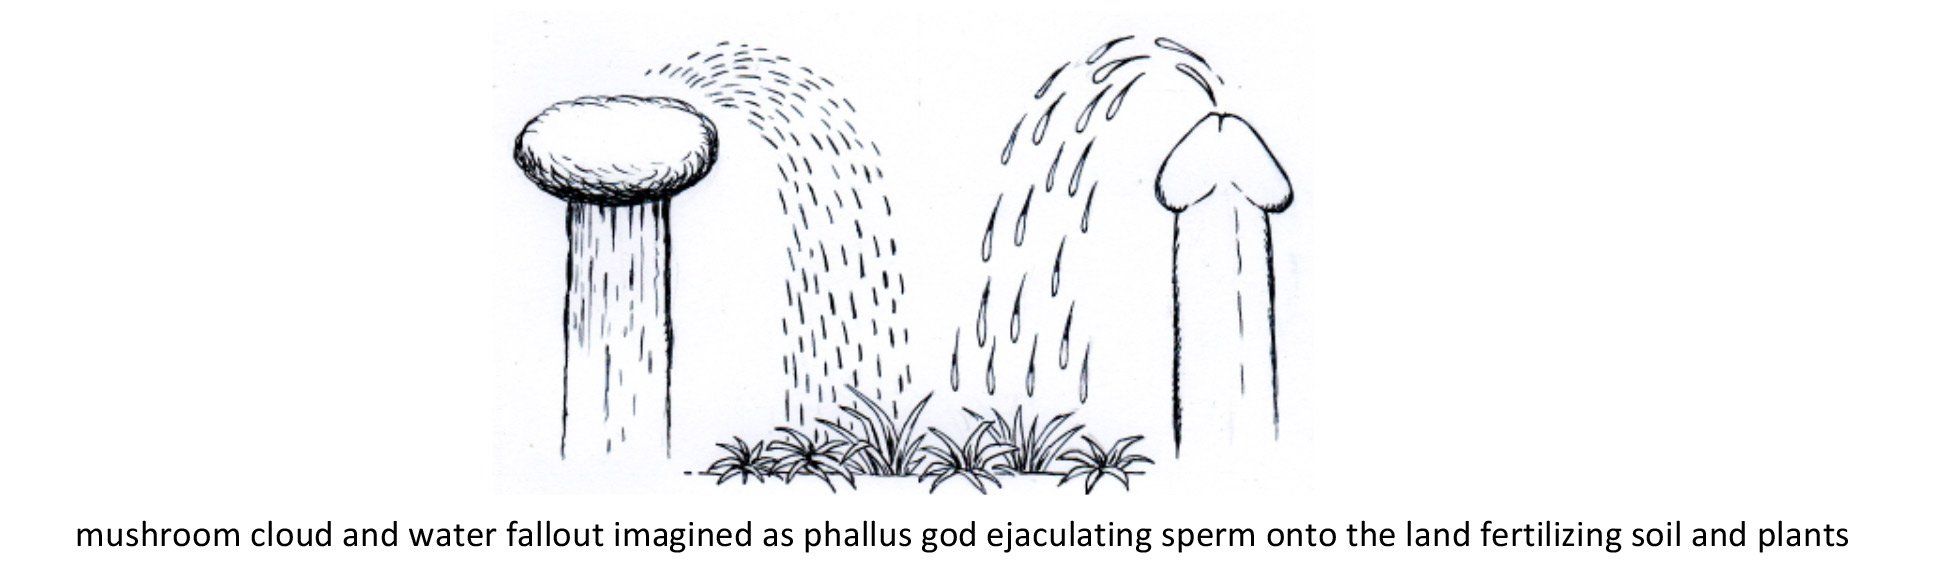 The sperm of god symbol